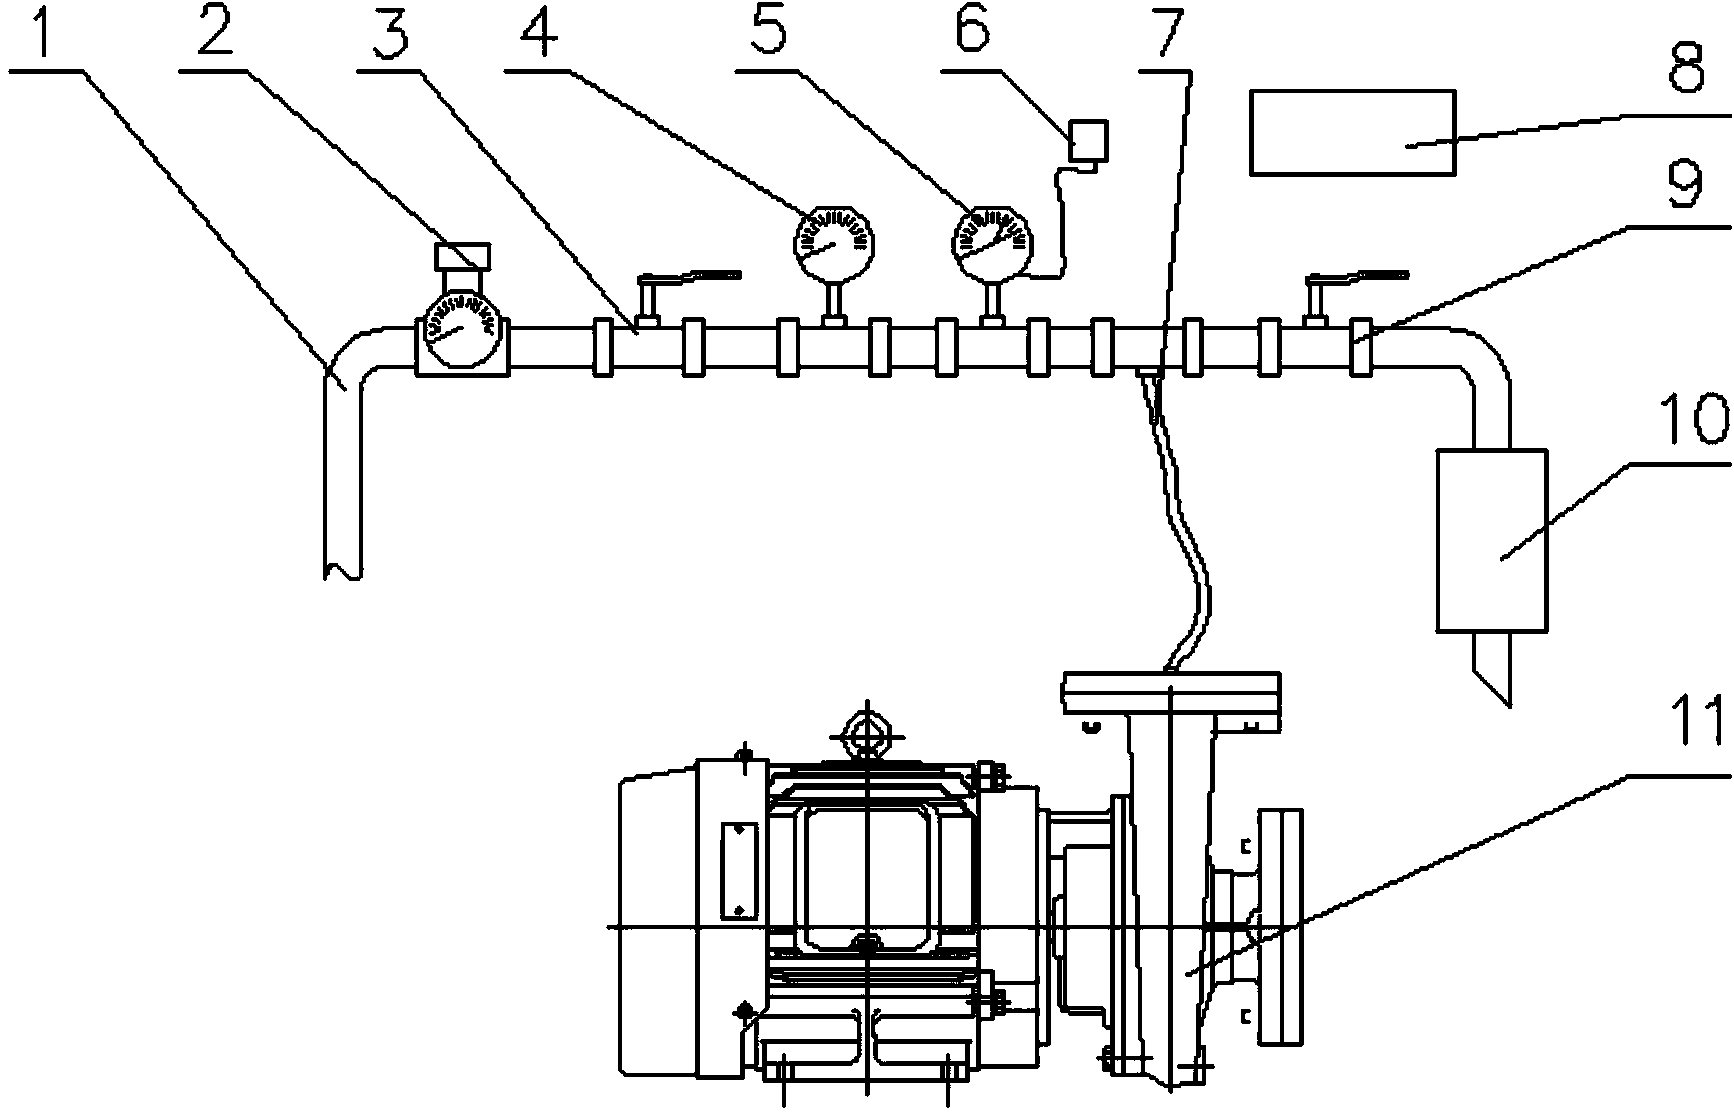 Pressure test device of pump